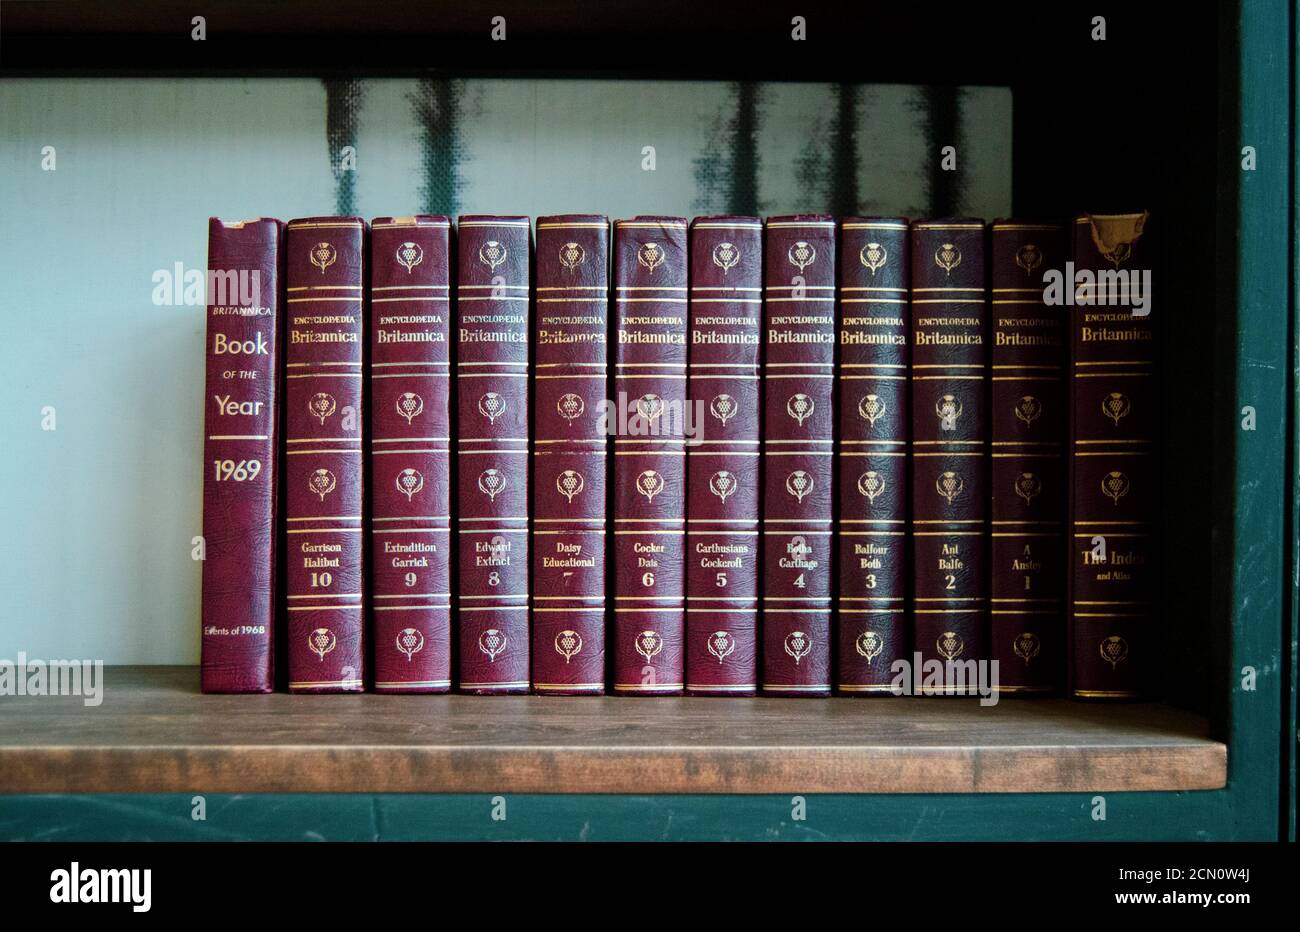 A row of vintage encyclopedia Britannica books on the shelf. Stock Photo